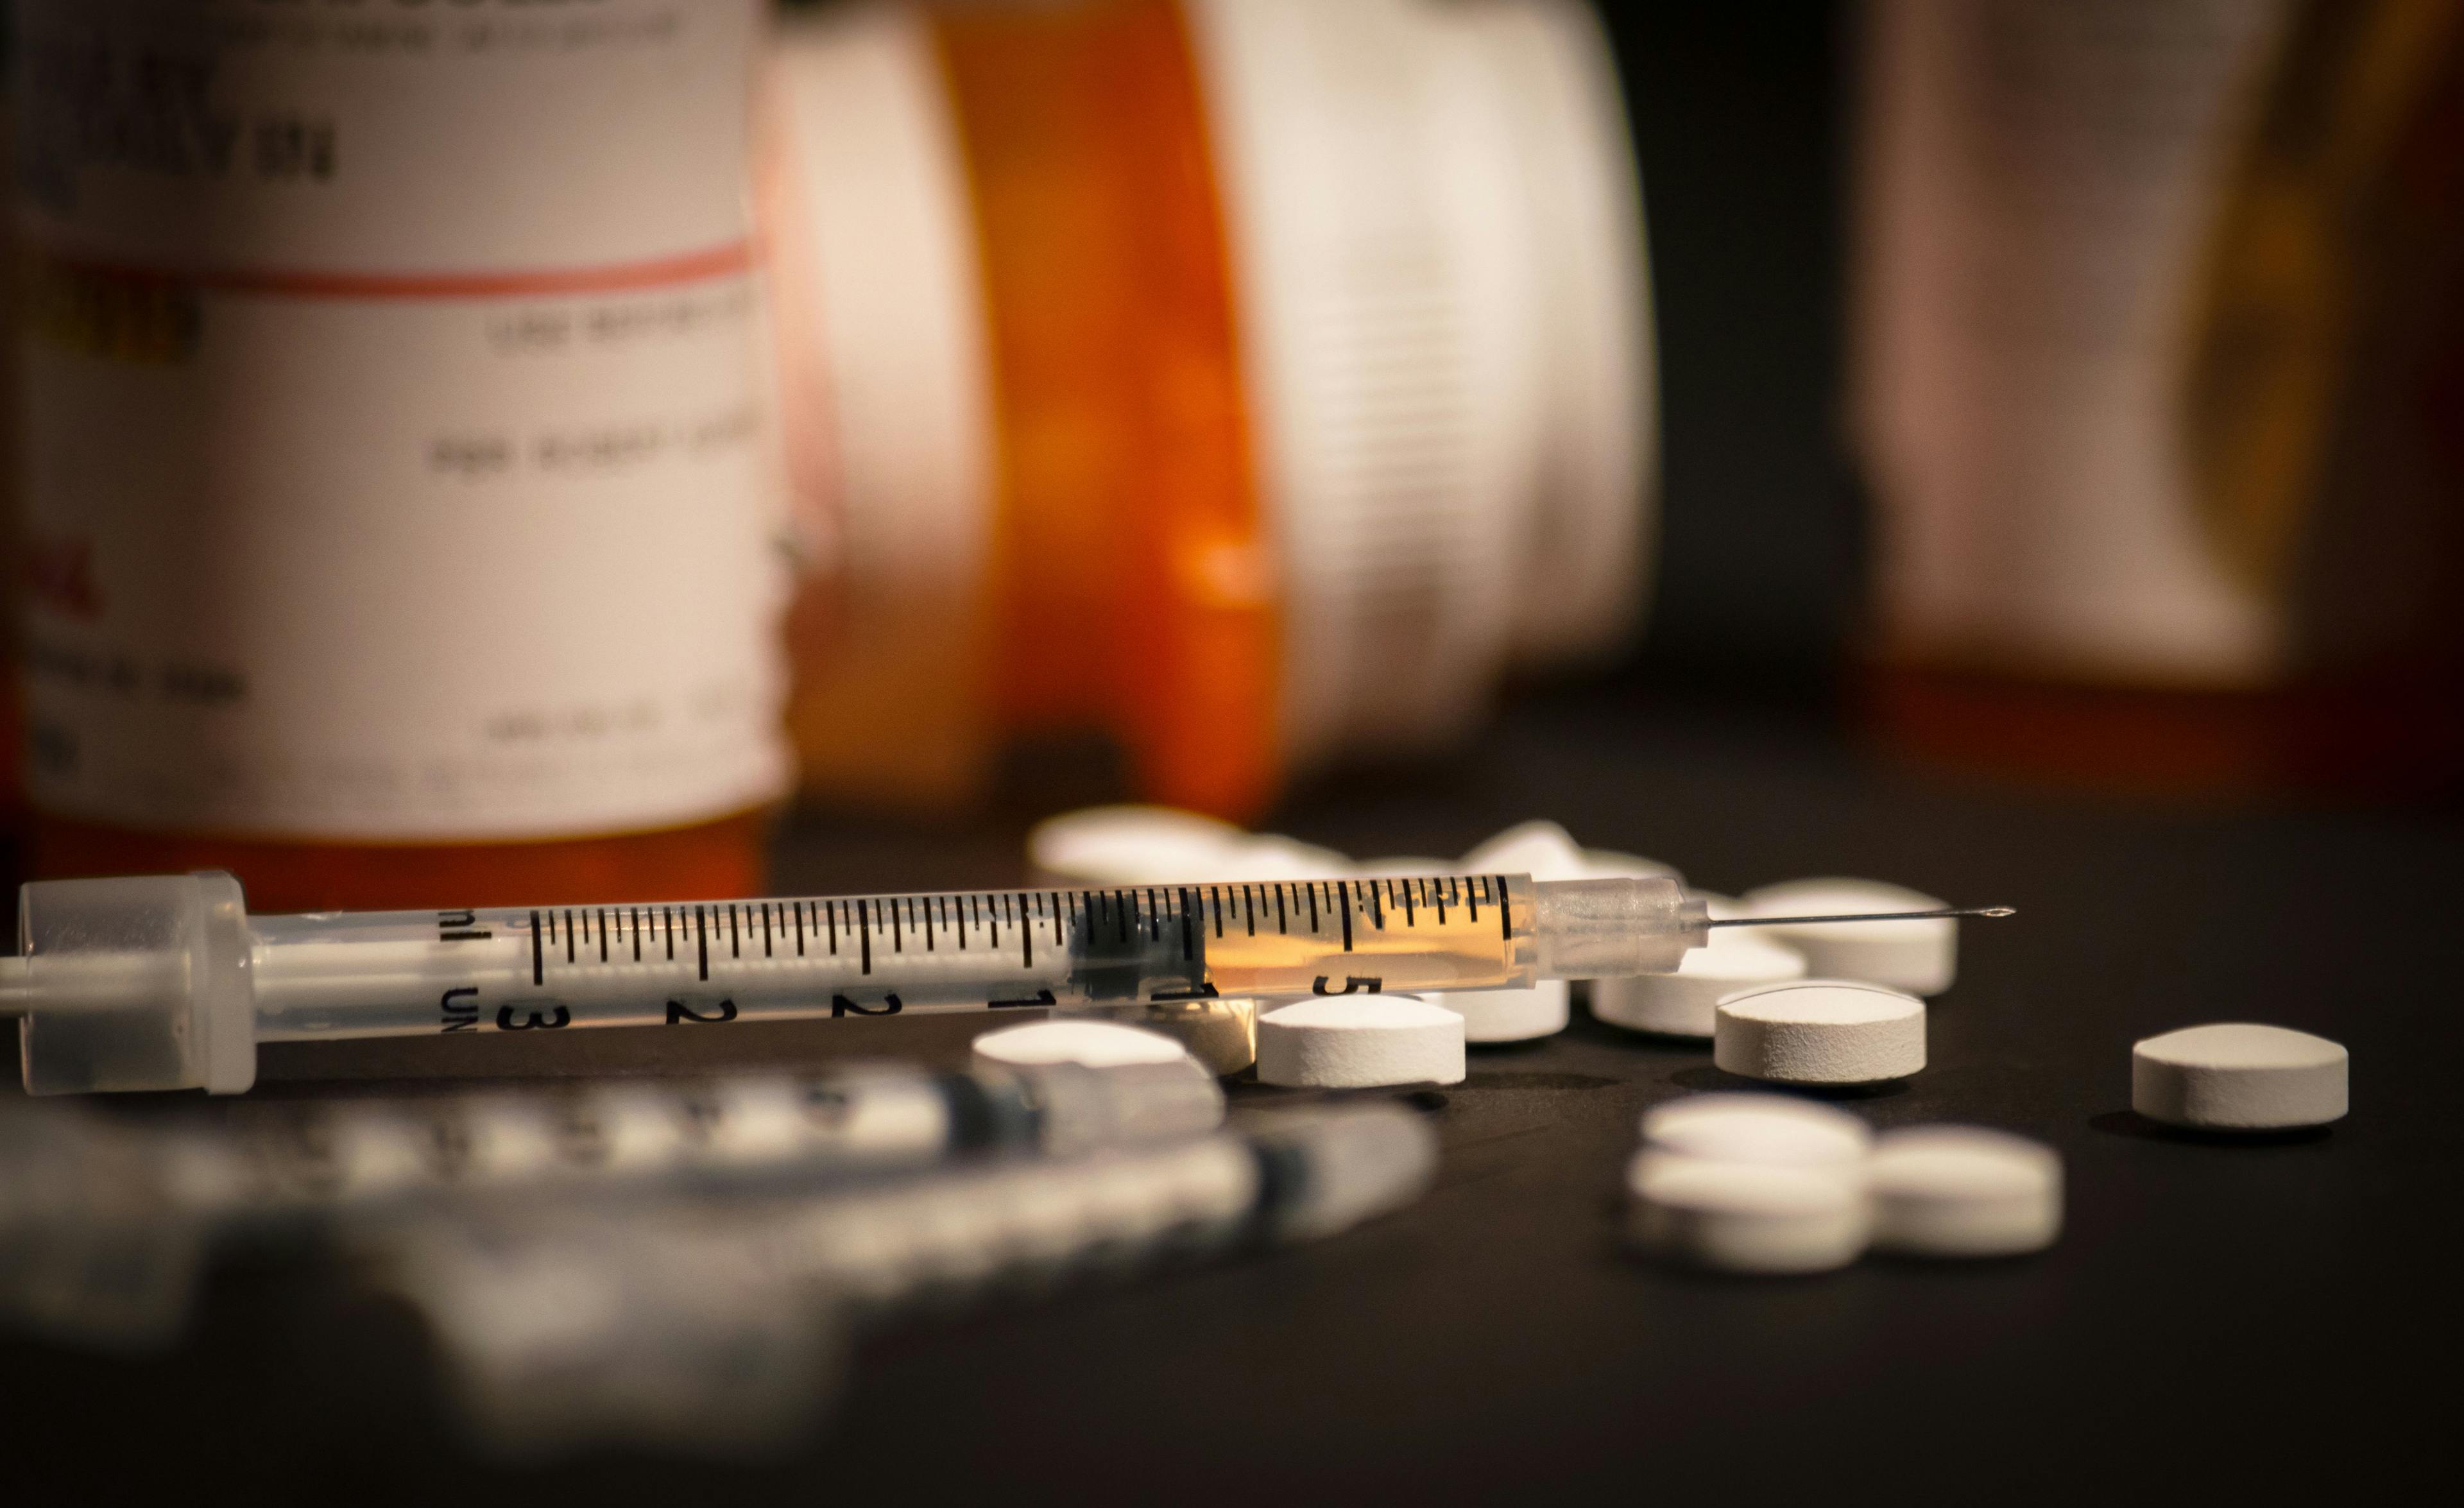 Loaded Syringe and Pills | Image Credit: © Darwin Brandis - stock.adobe.com